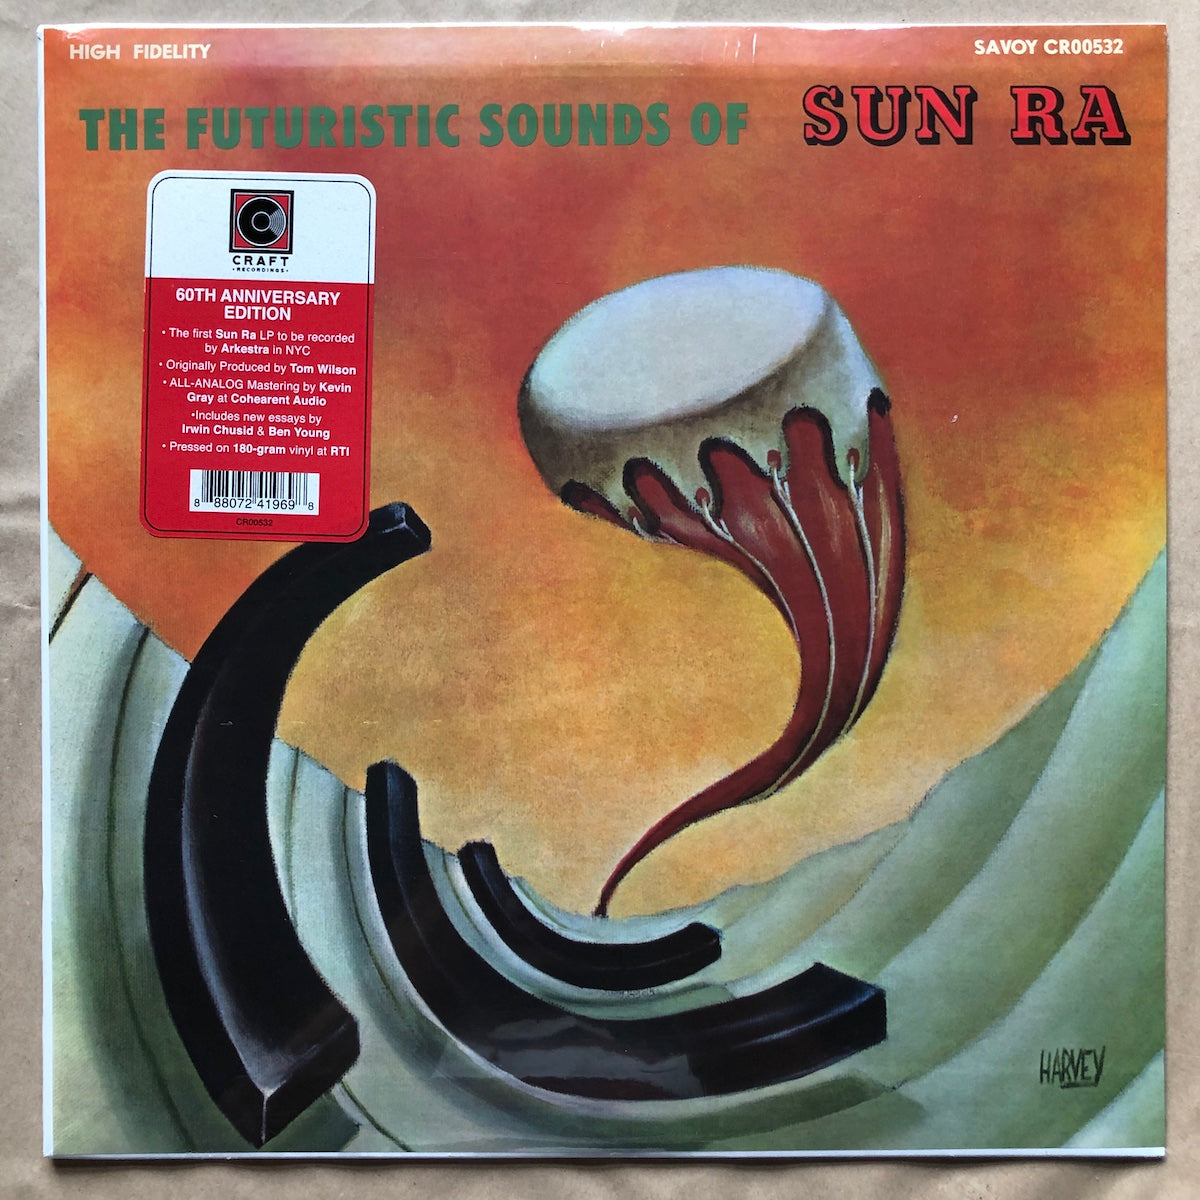 The Futuristic Sounds of Sun Ra (Craft Jazz Essentials): Vinyl LP